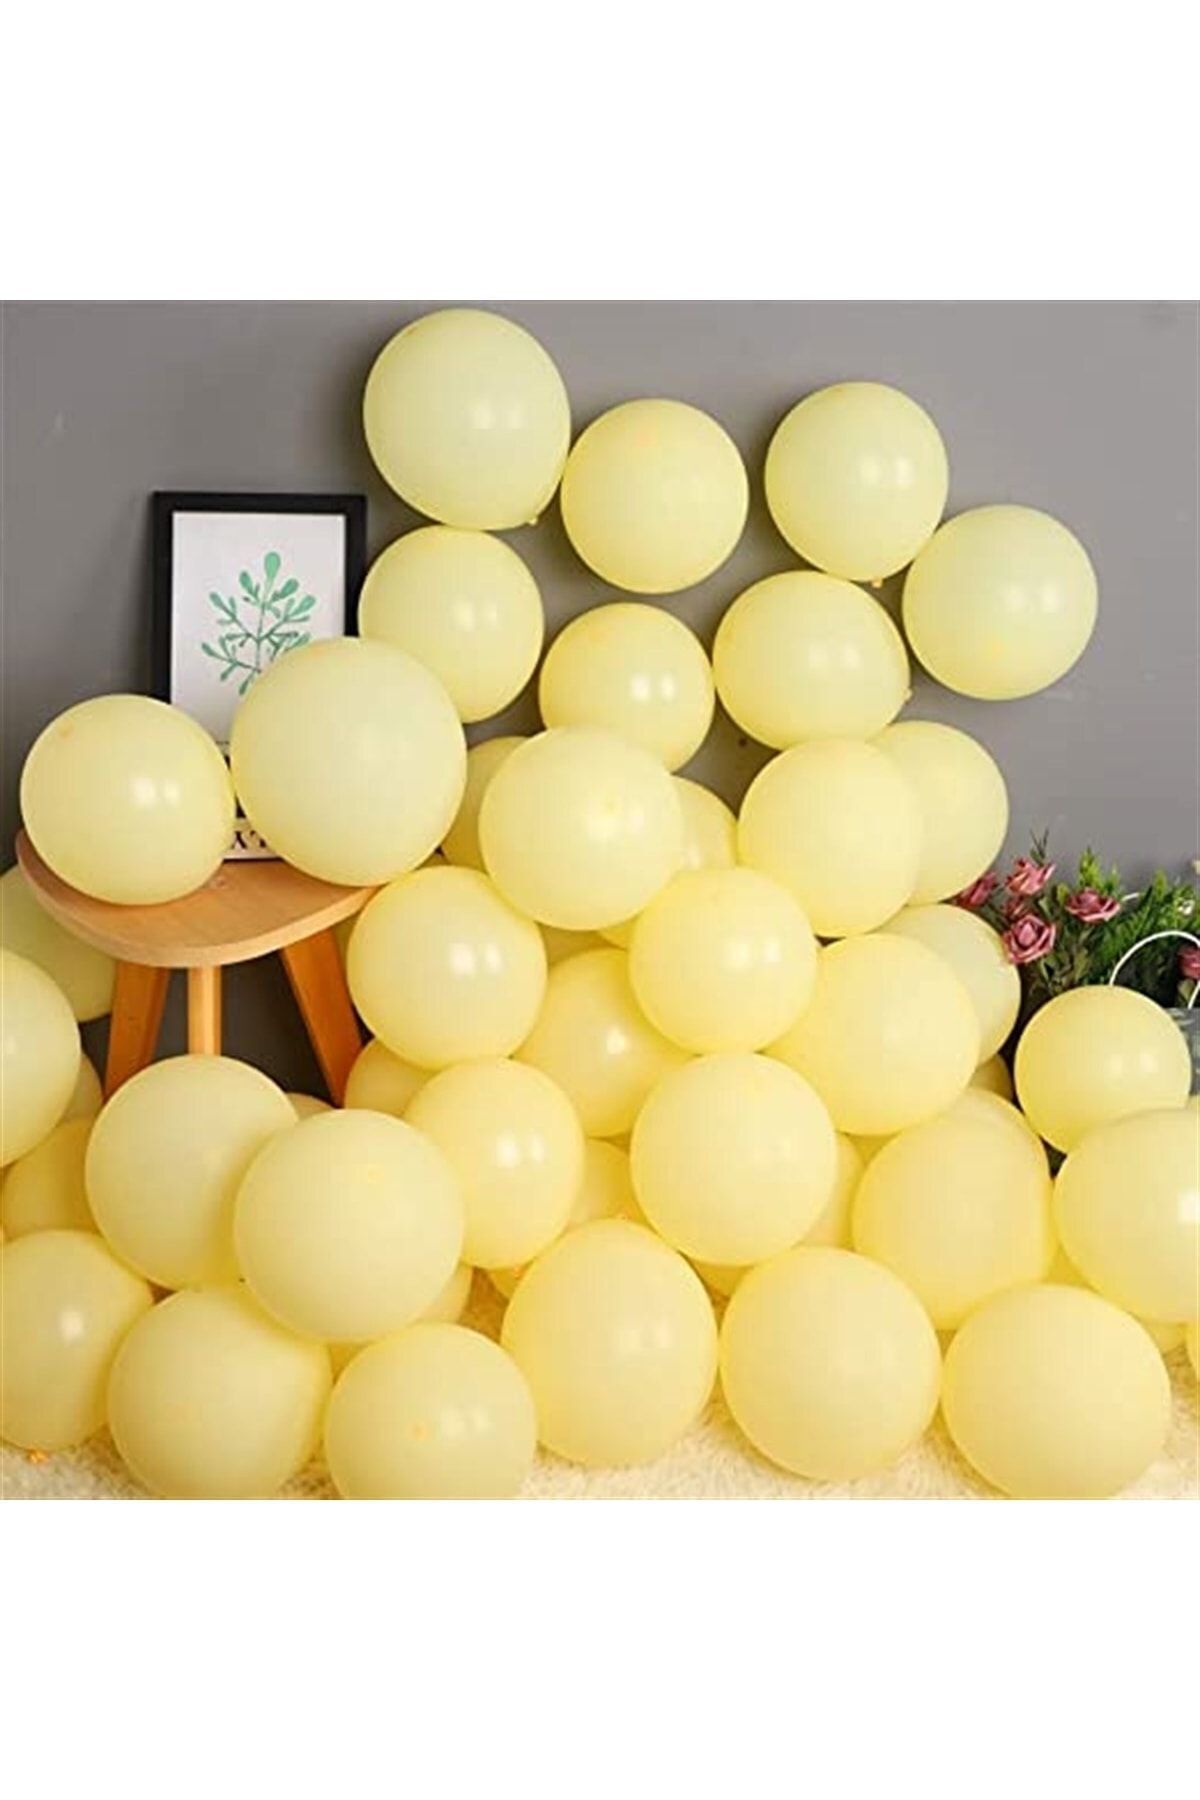 HKNYS 100 Adet Sarı Renk Soft Makaron Balon-+ Balon Zinciri Balon Bandı Balon Pompası